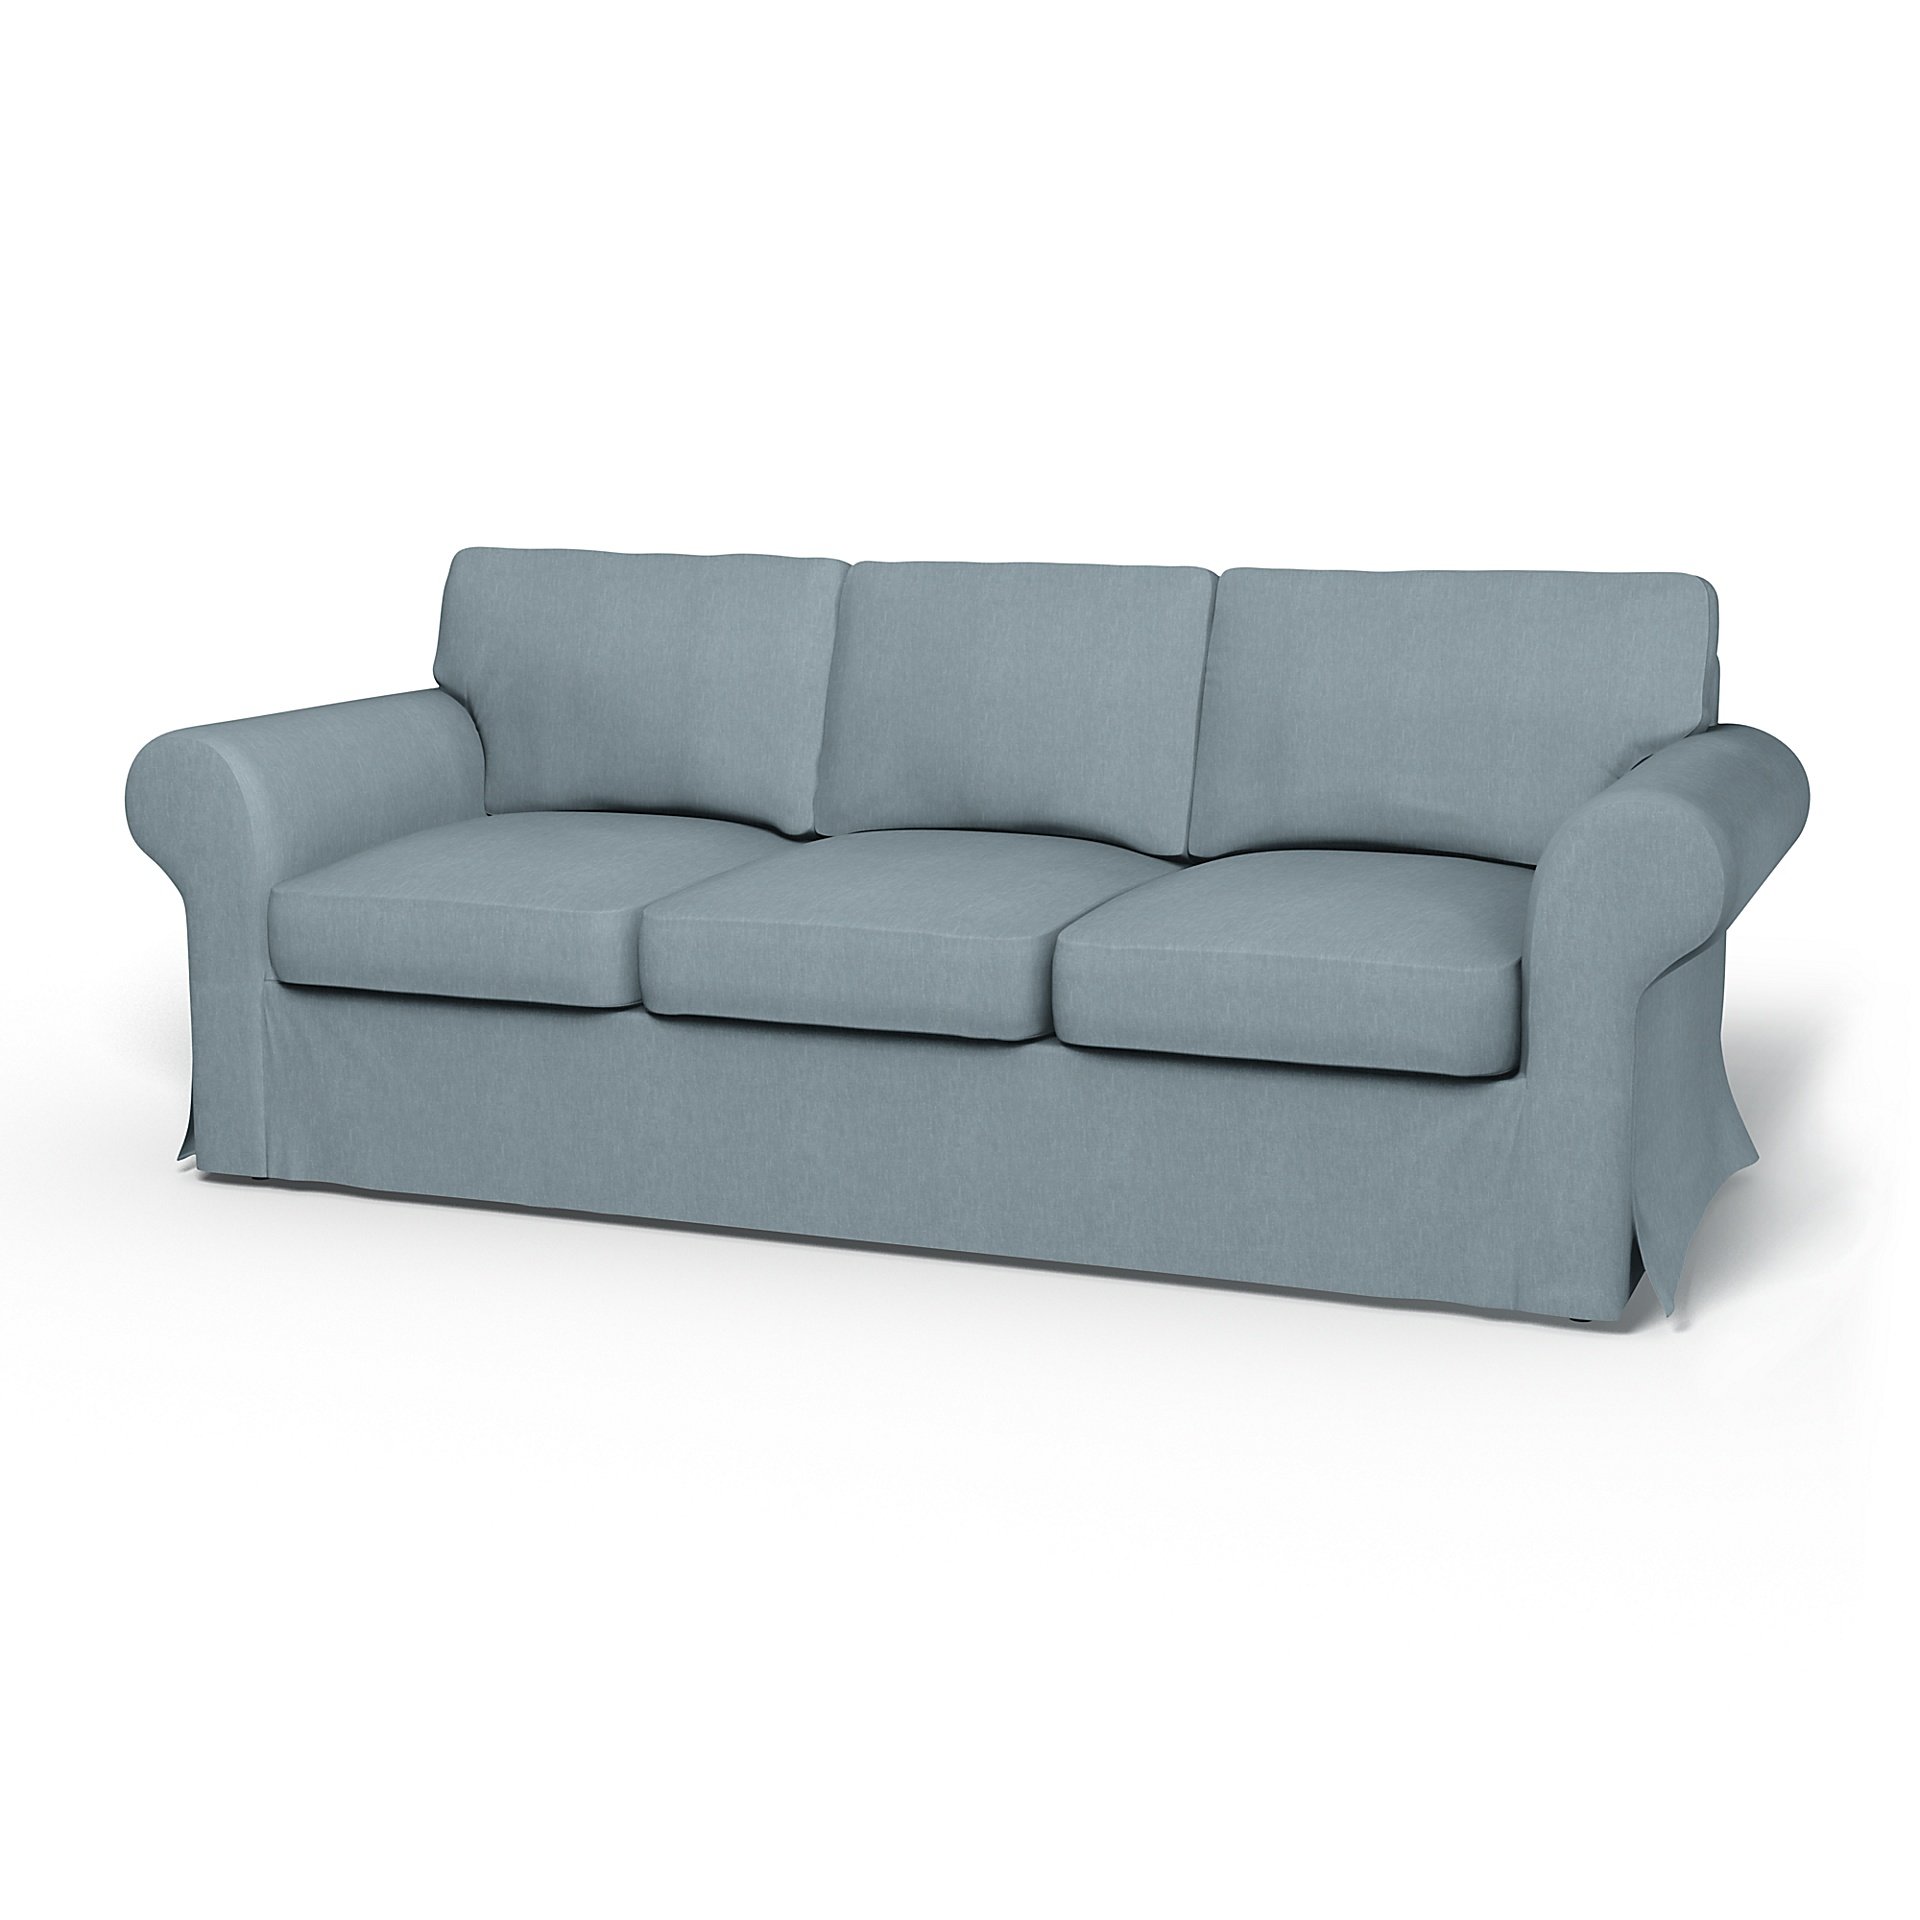 IKEA - Ektorp 3 Seater Sofa Bed Cover, Dusty Blue, Linen - Bemz